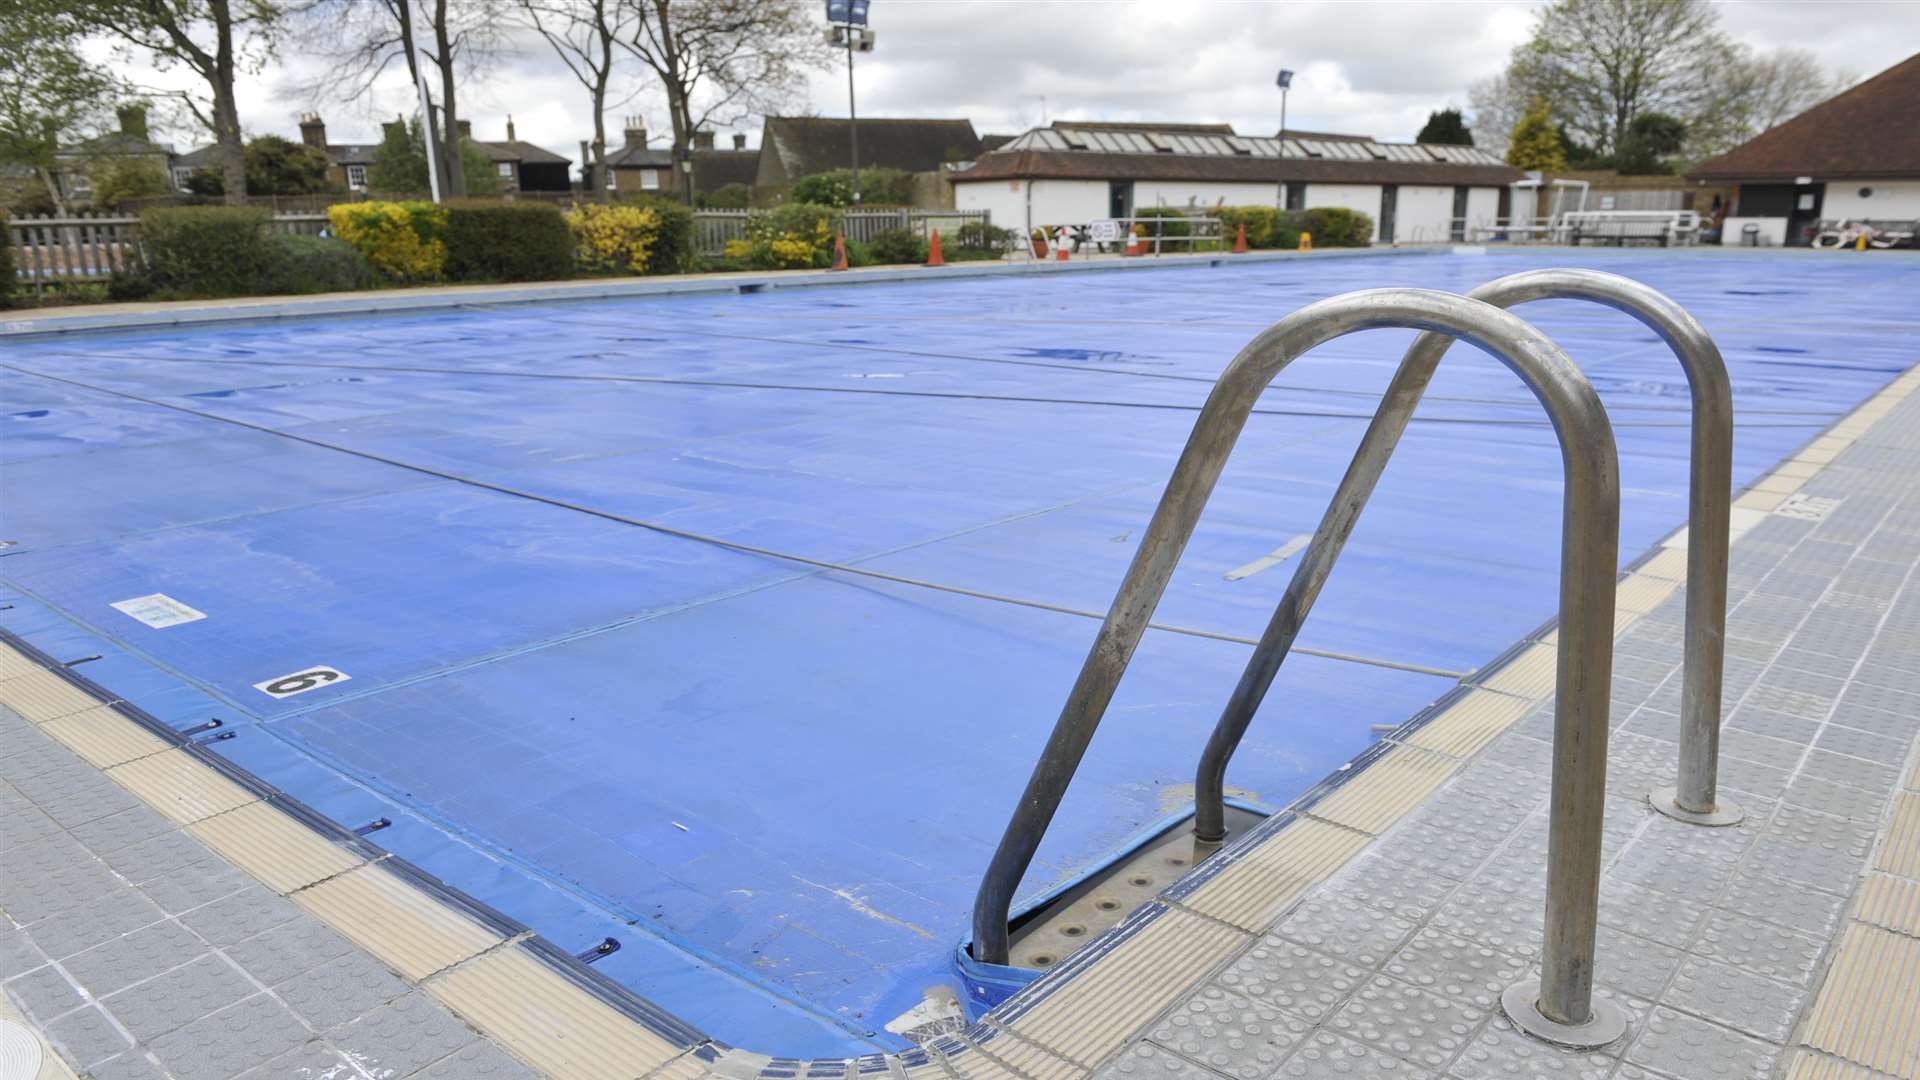 Faversham's outdoor pool